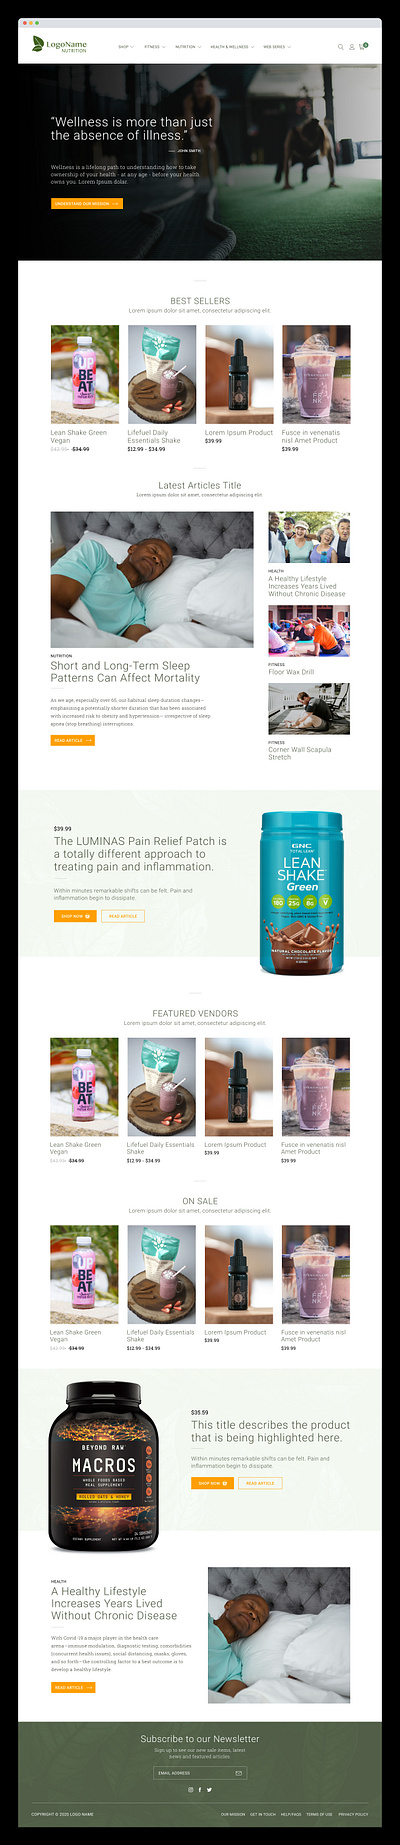 E-Commerce Homepage - 2020